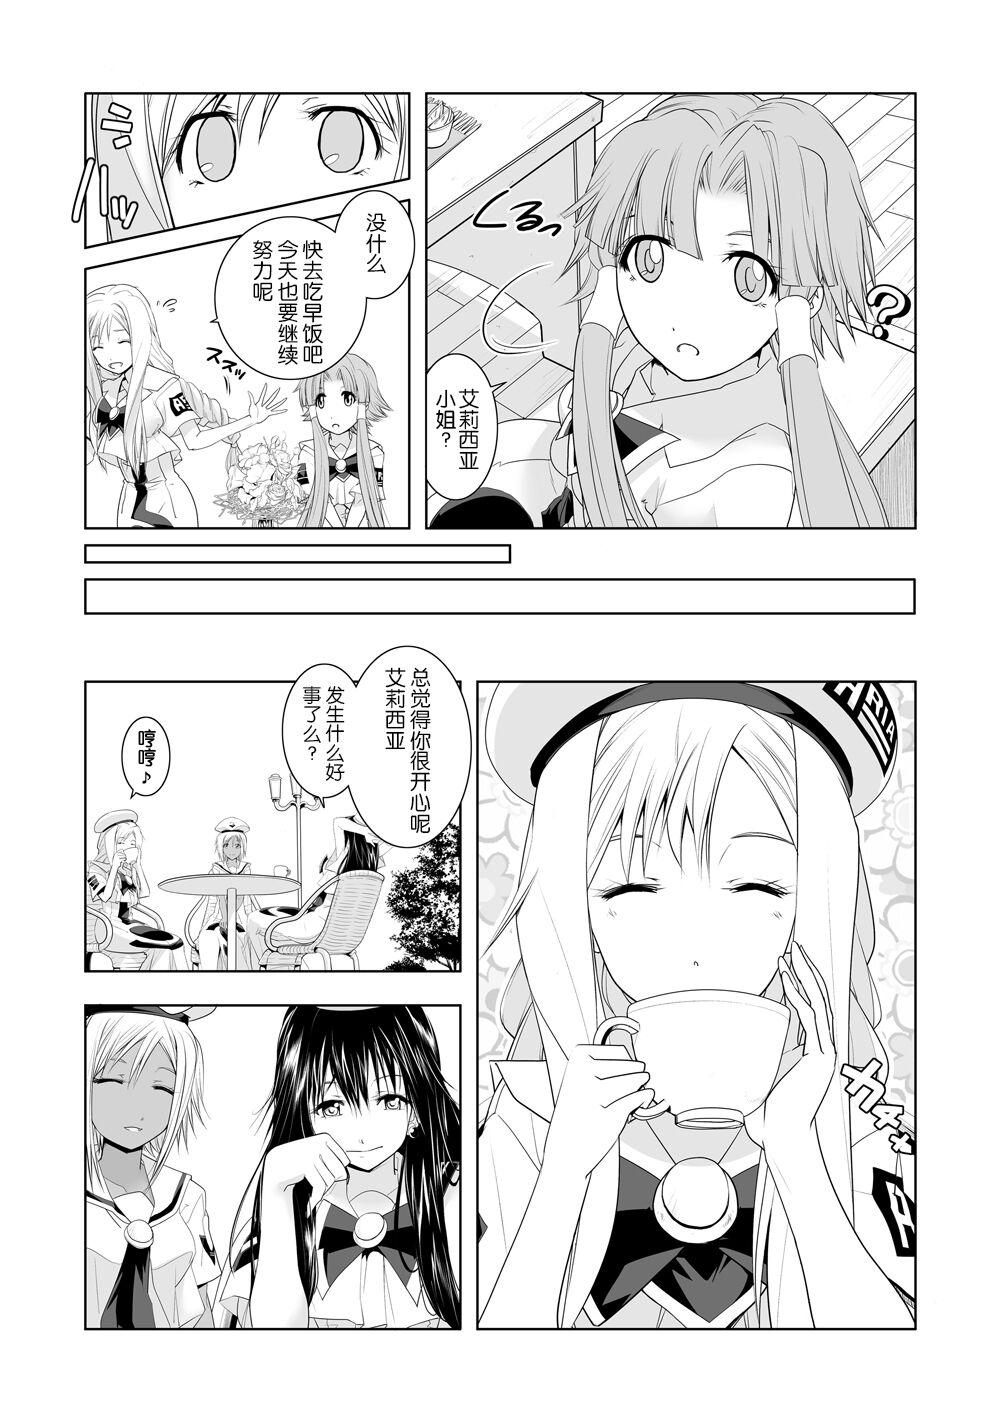 Weird AR*A Mind-control Manga - Aria Amigos - Page 5